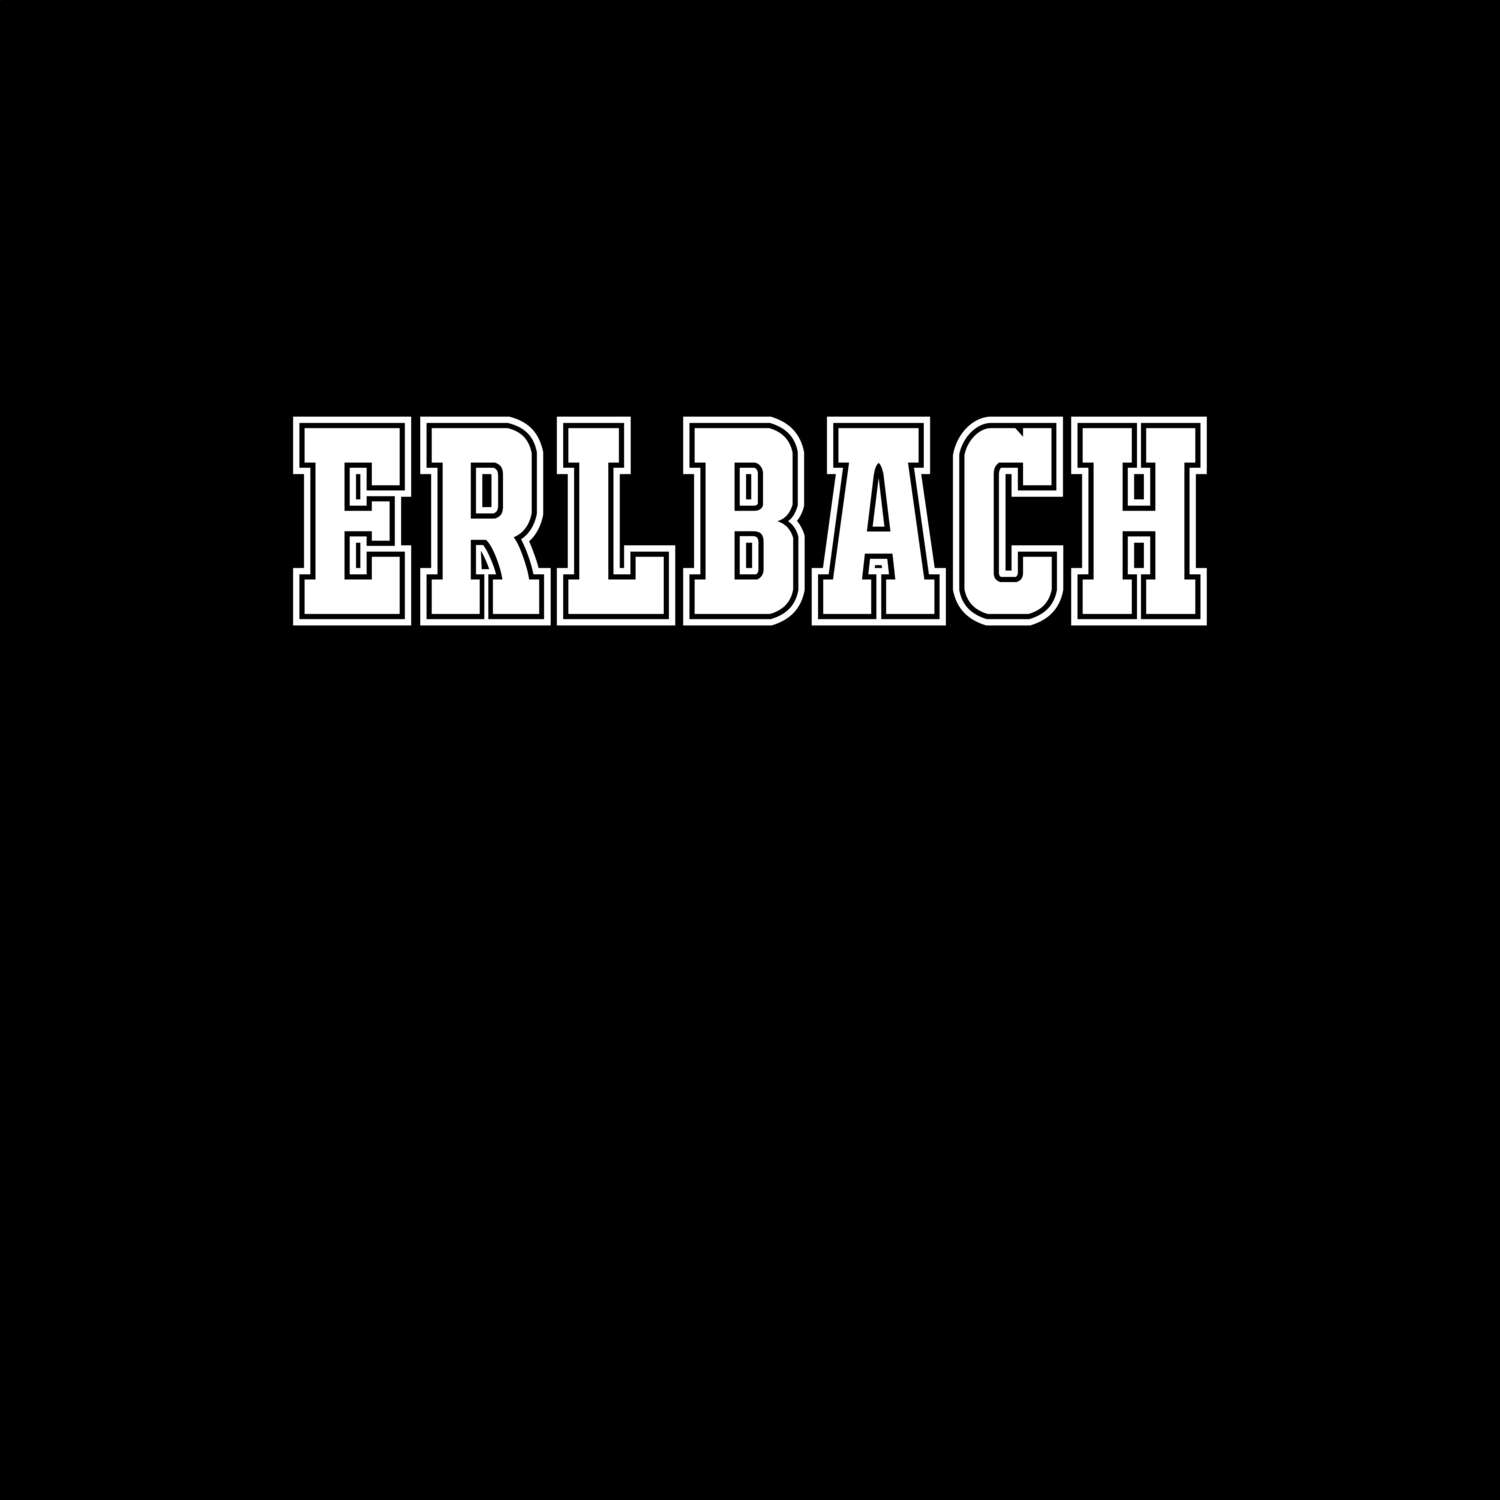 Erlbach T-Shirt »Classic«